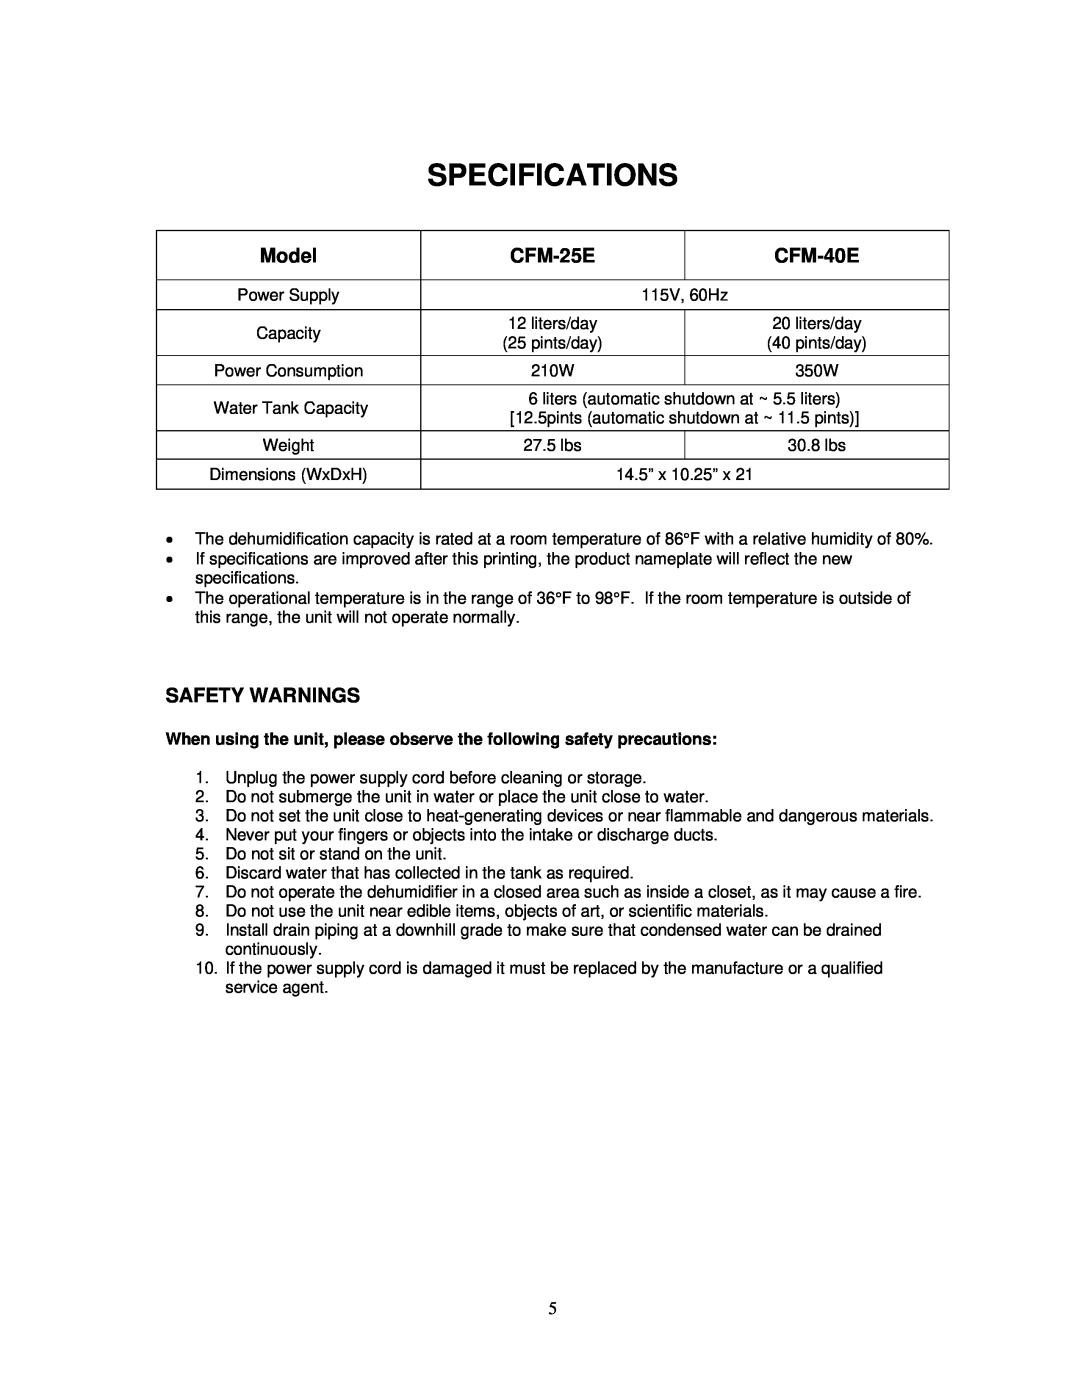 Soleus Air PORTABLE DEHUMIDIFIER user manual Specifications, Model, CFM-25E, CFM-40E, Safety Warnings 